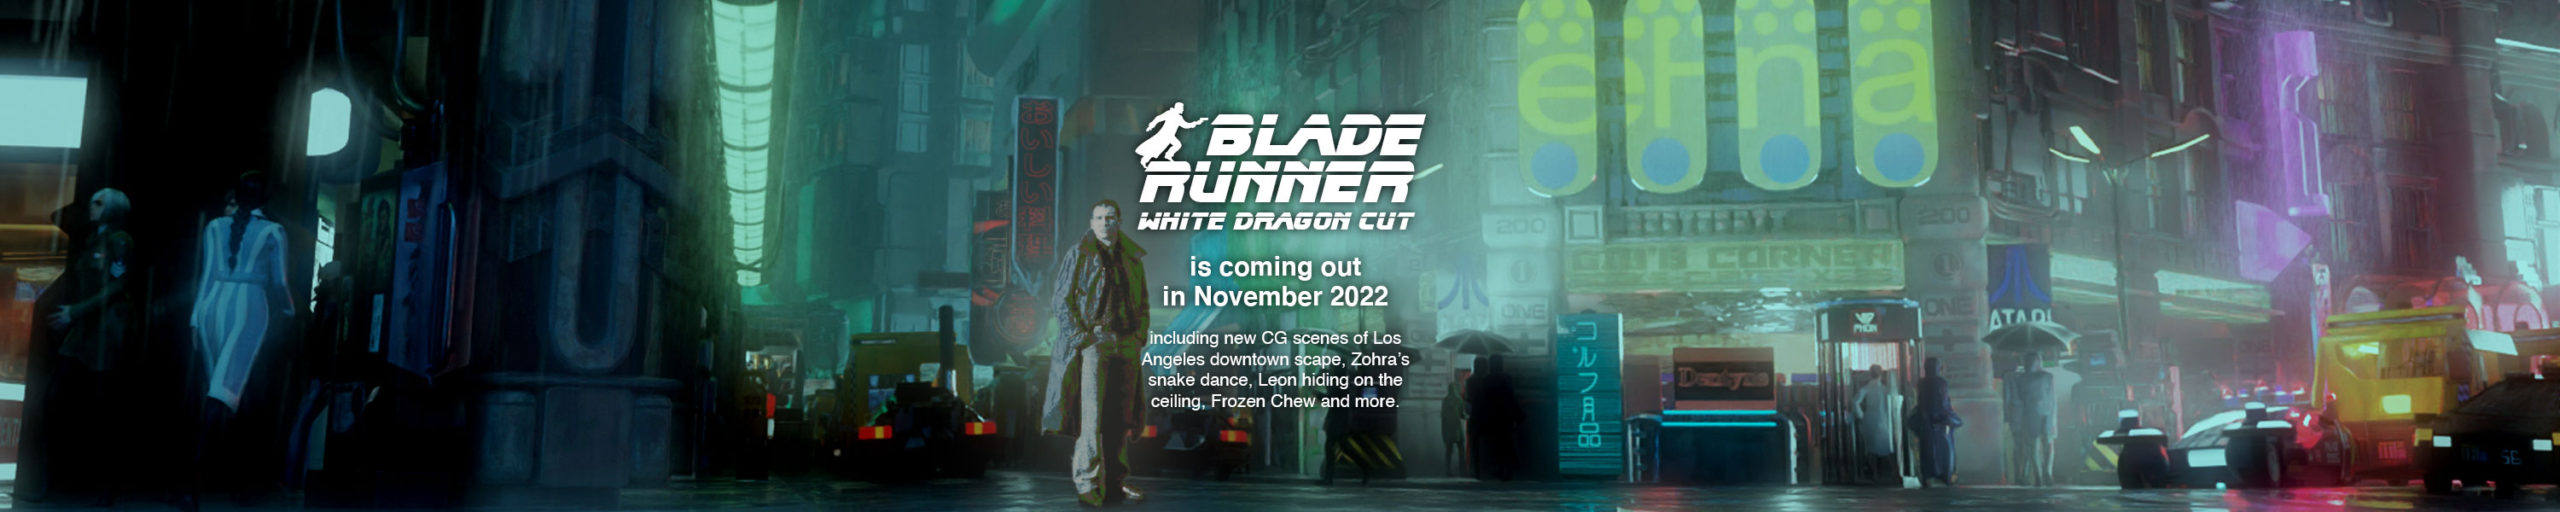 Blade Runner White Dragon Cut